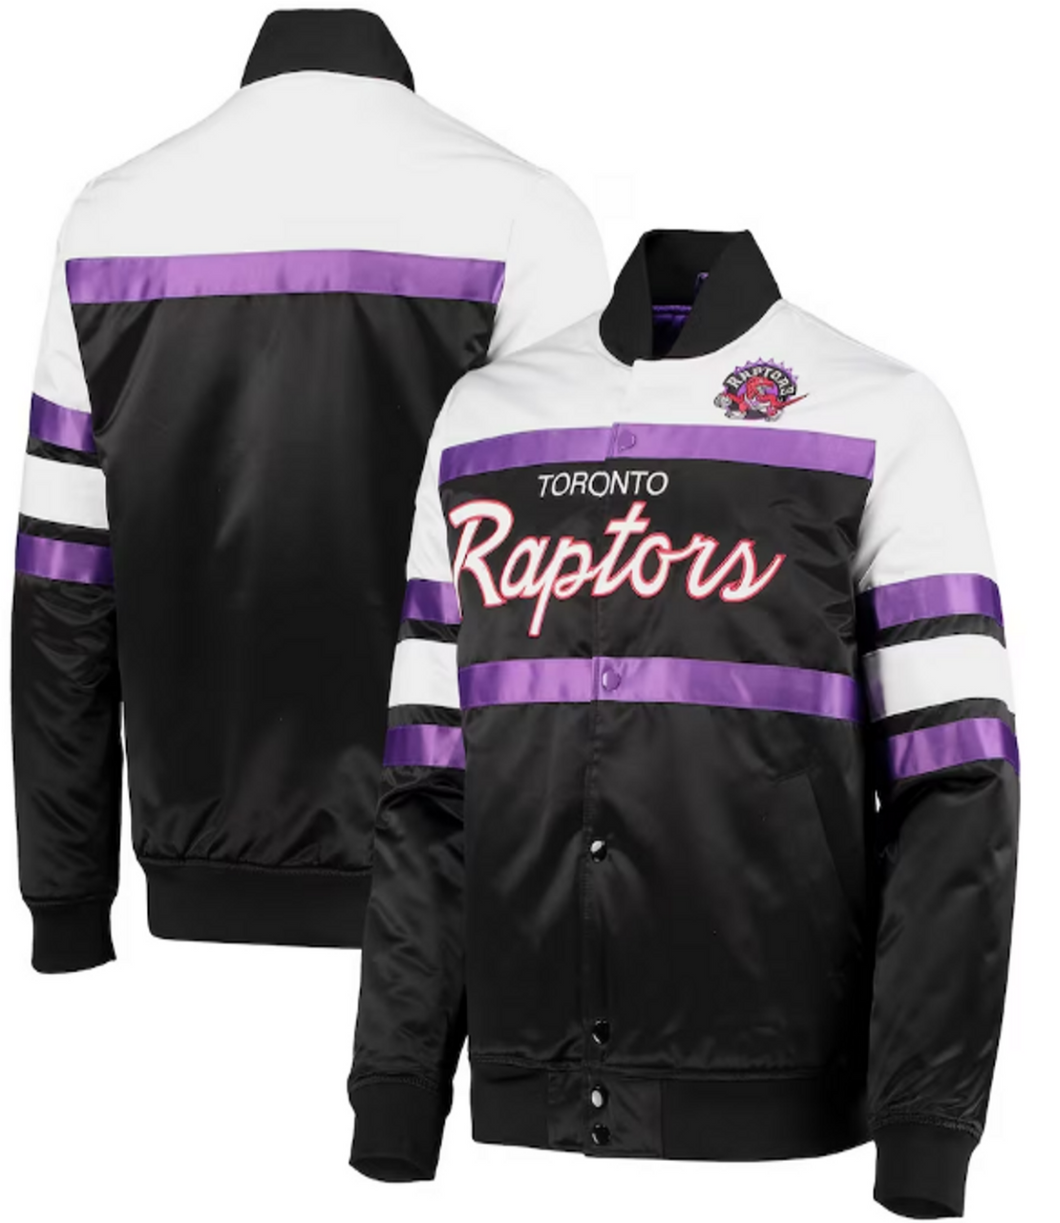 Toronto Raptors Bomber Jacket